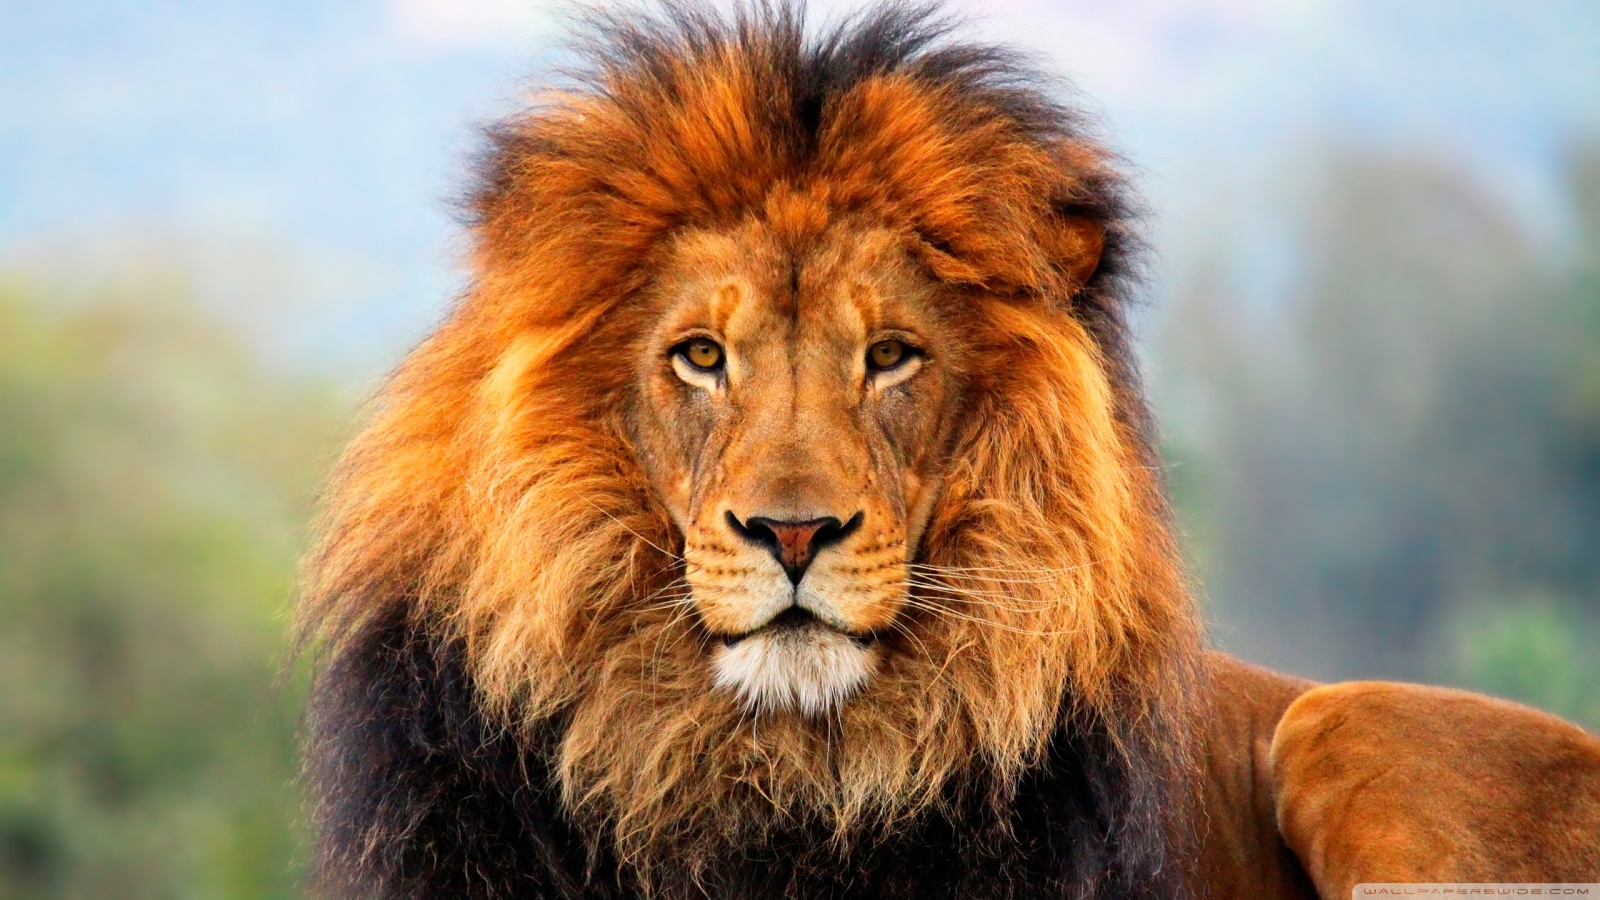 Roaring Lion Mobile Wallpaper Animal Background